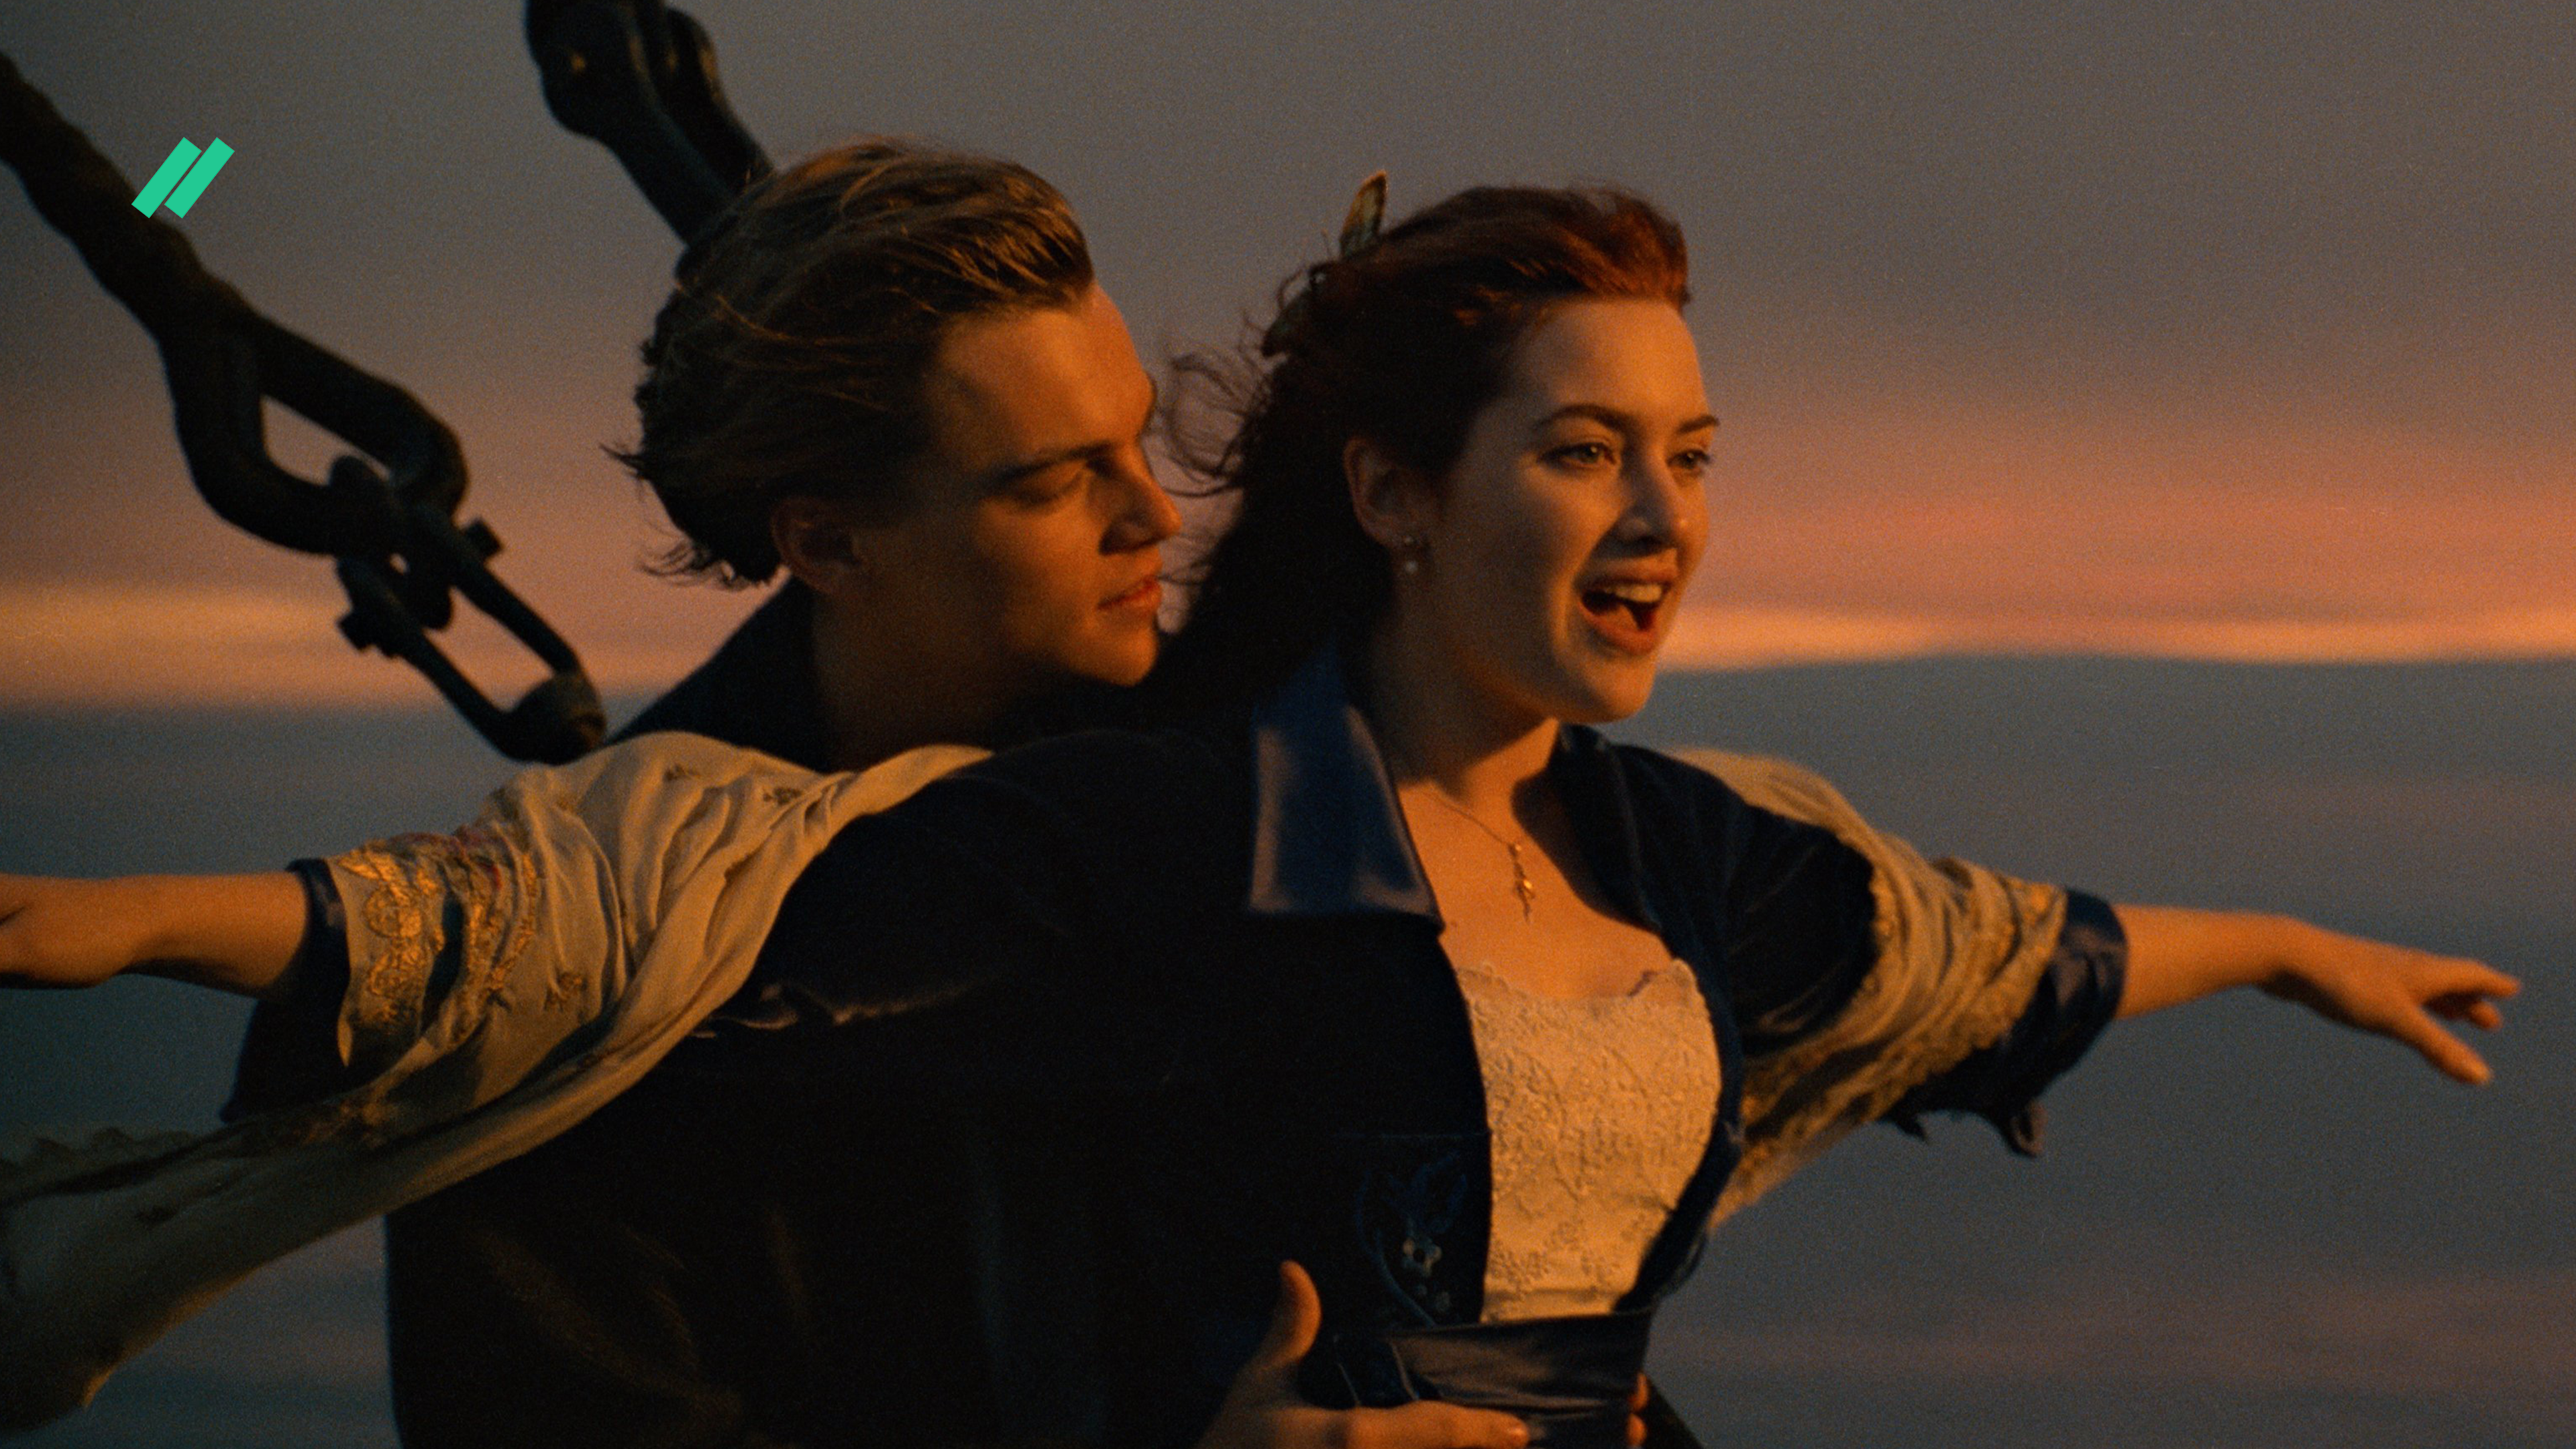 Самый лучший фрагмент. Титаник 1997. Леонардо ди Каприо Титаник. Элайджа Вуд на самокате.